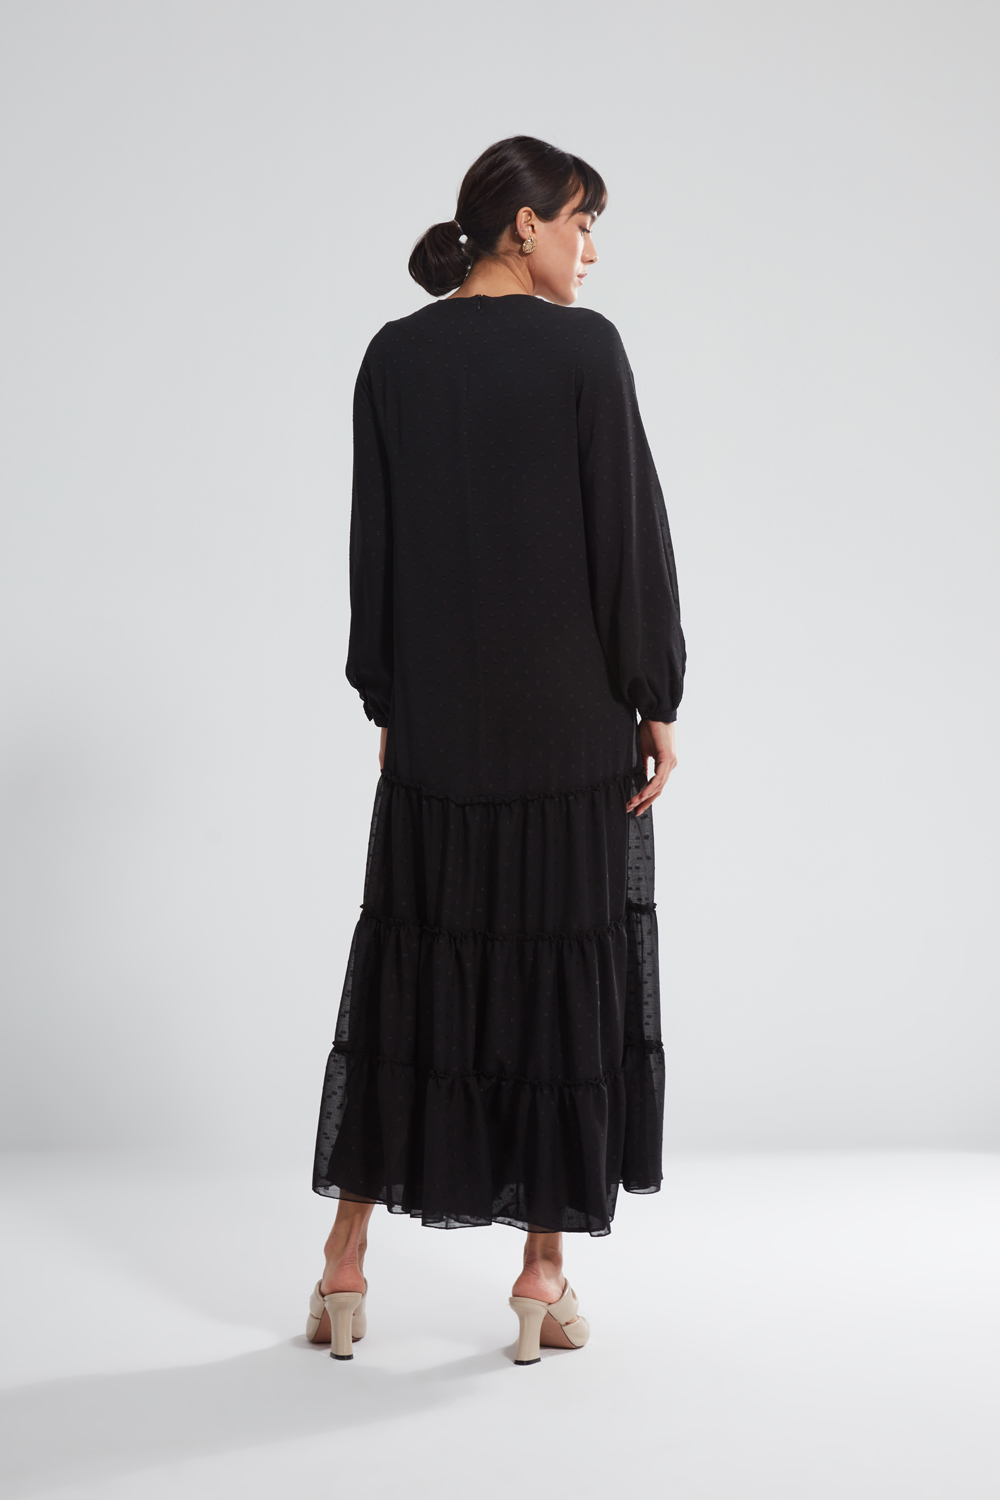 Black Maxi Dress With Ruffle Bottom Skirt